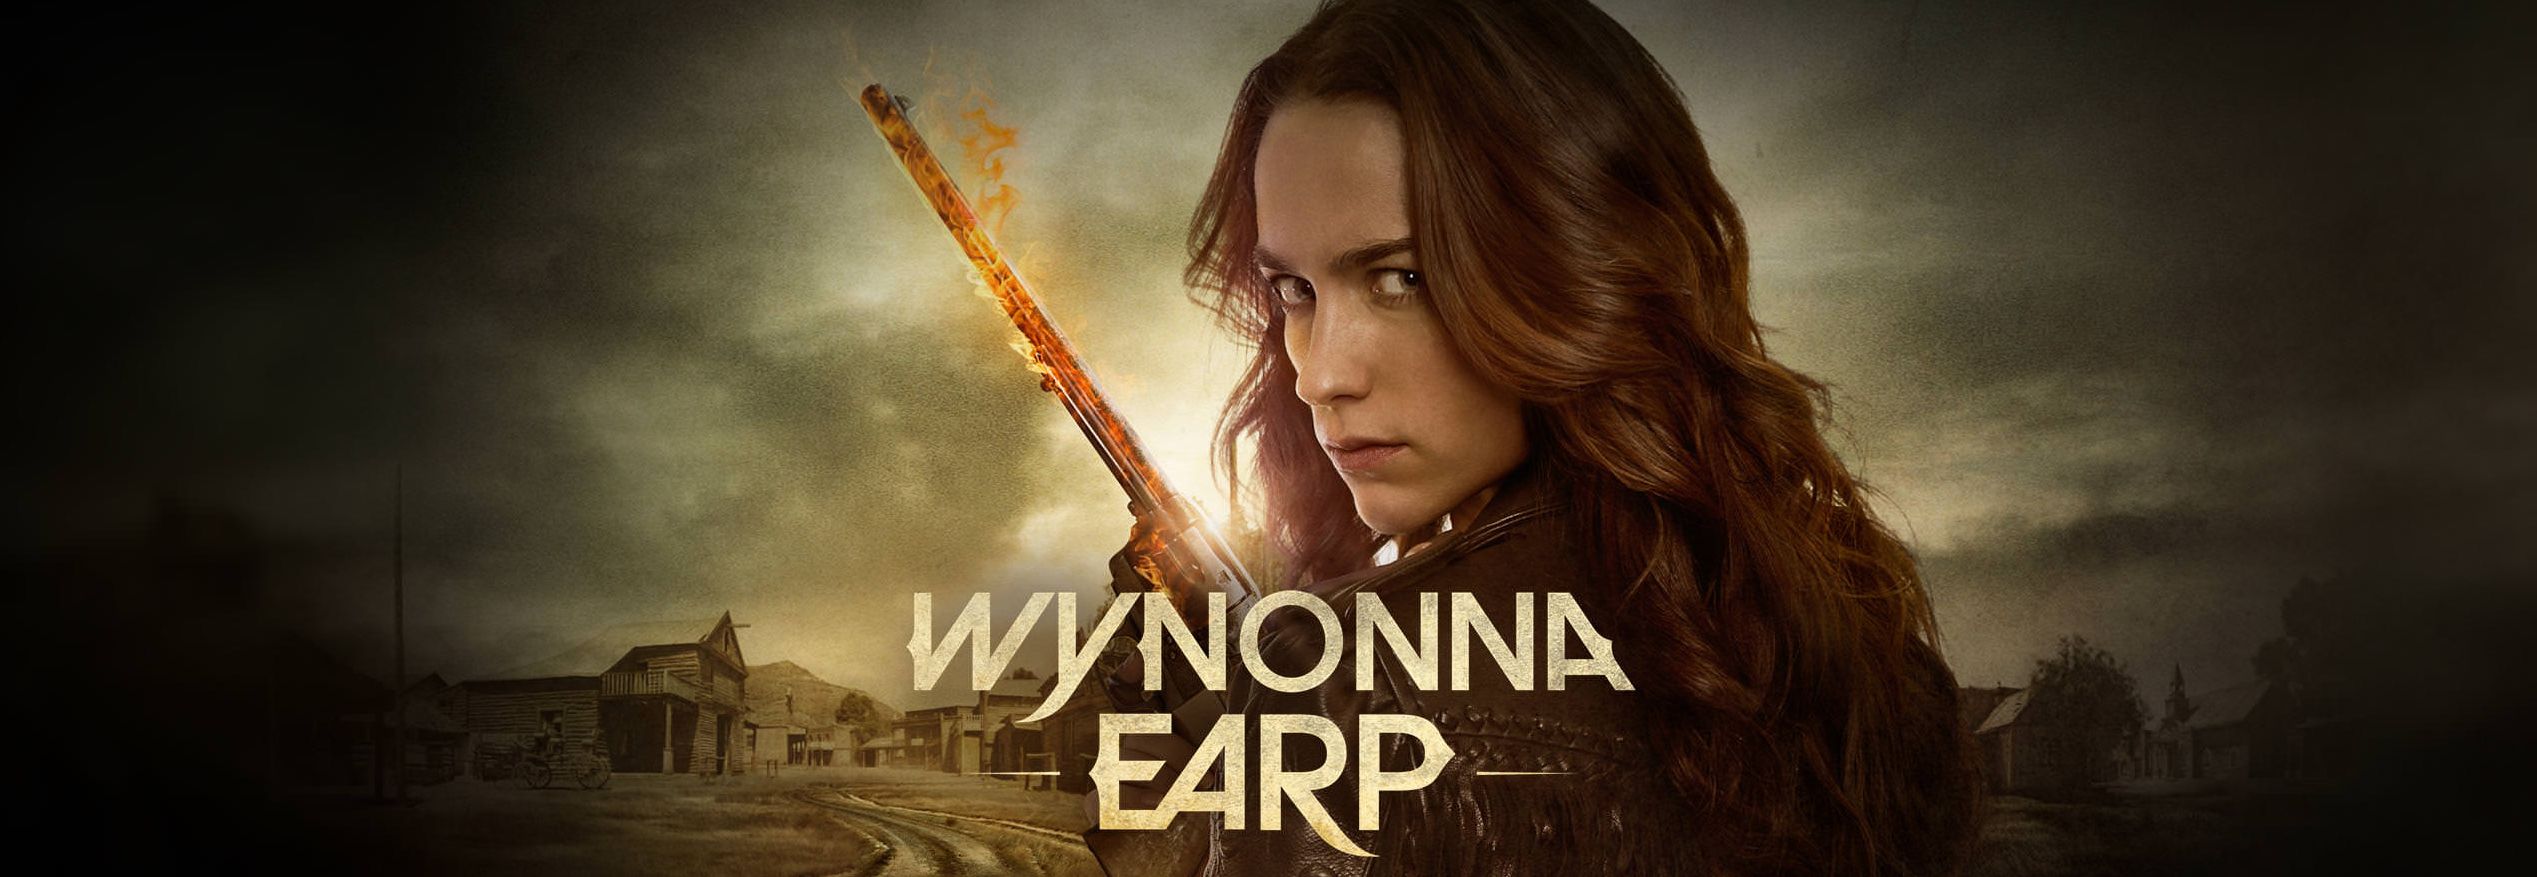 Wynonna Earp Promotional Image